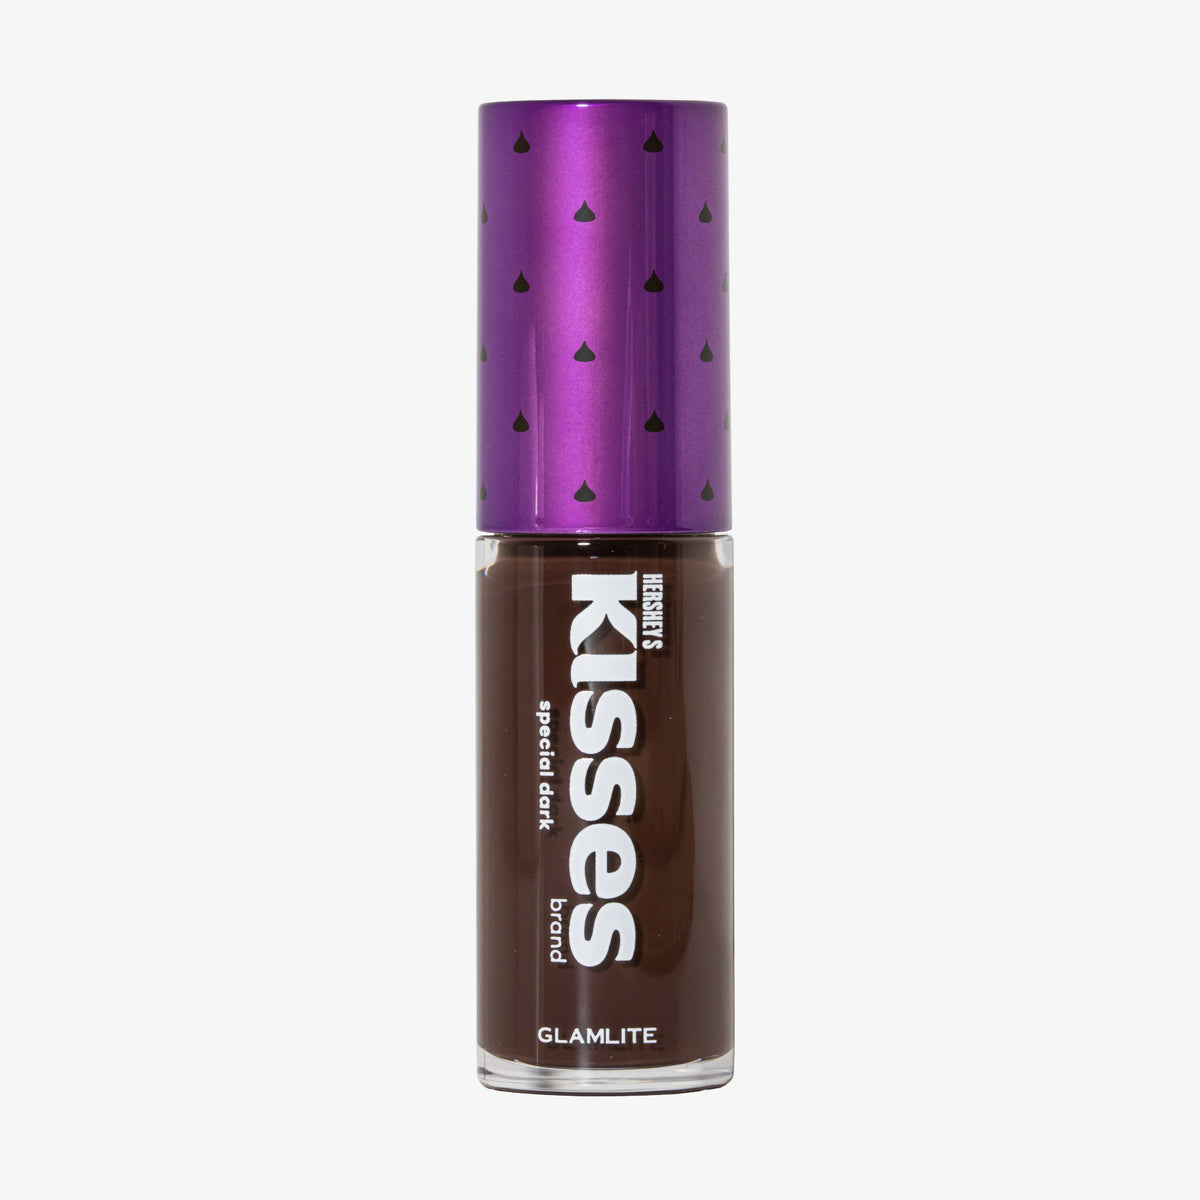 Glamlite Cosmetics | Hershey's Kisses x Glamlite Lip Gloss Set